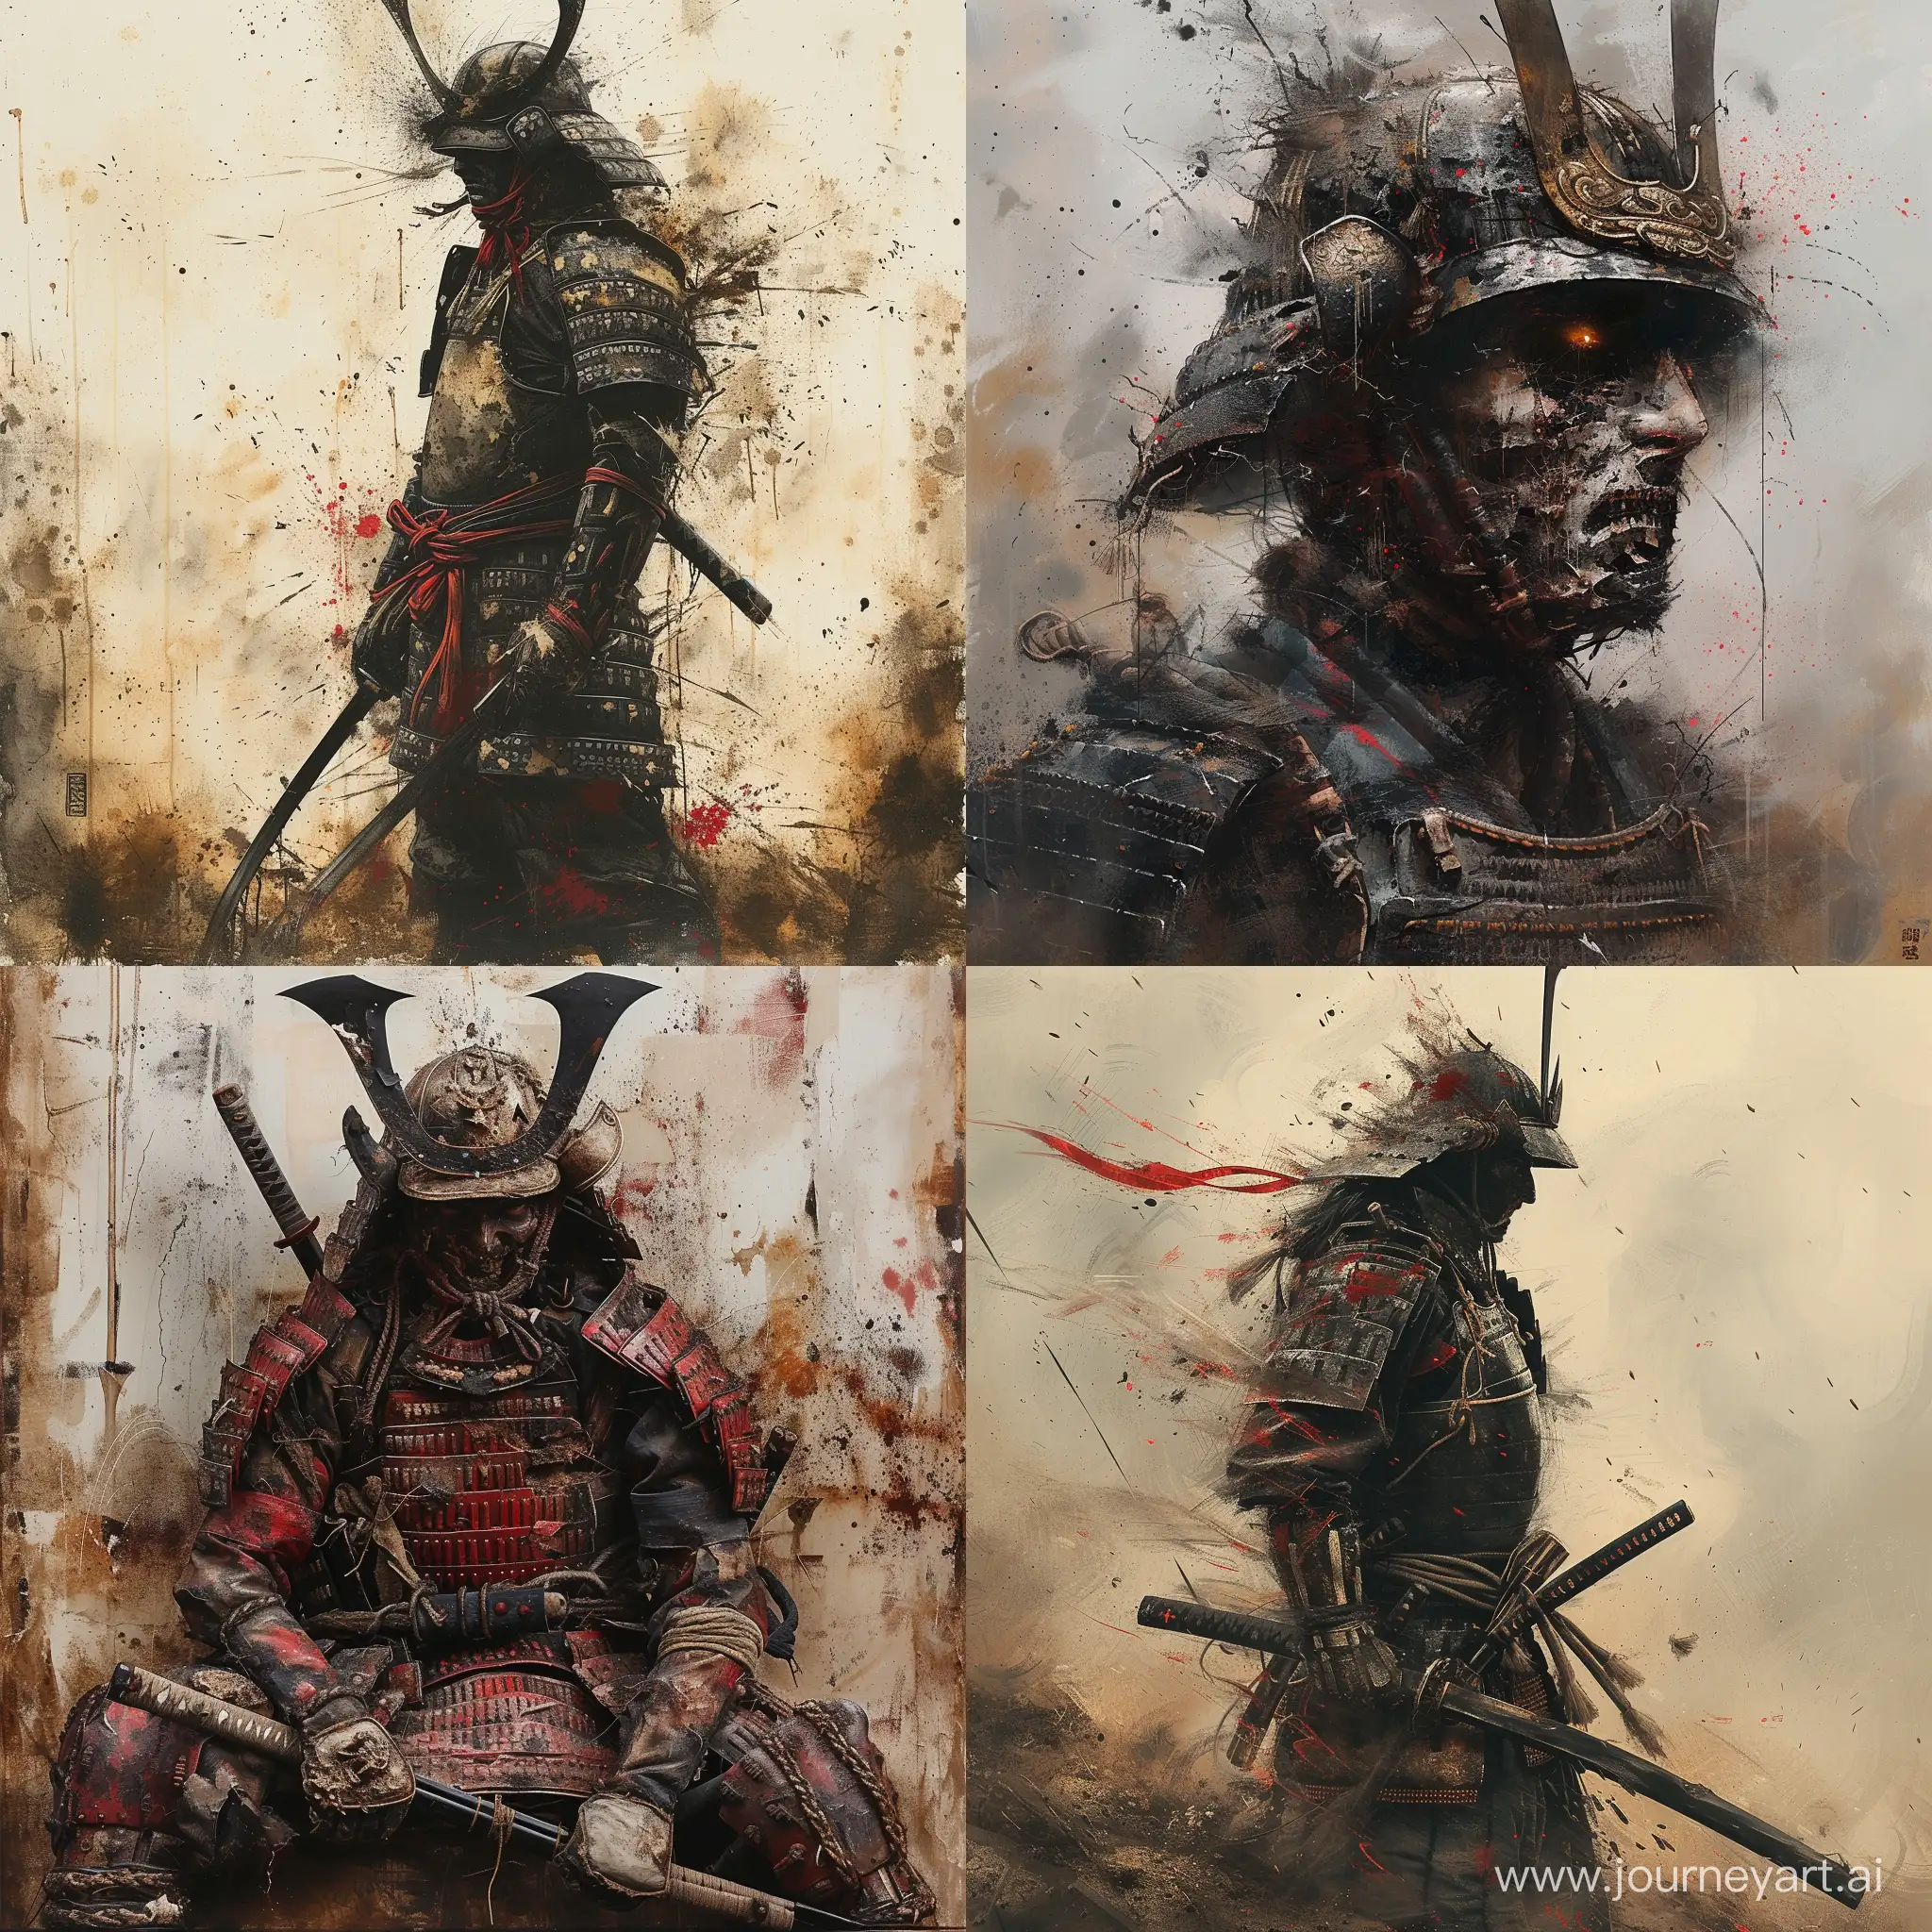 Battle-Worn Samurai: Artistic Surrealism